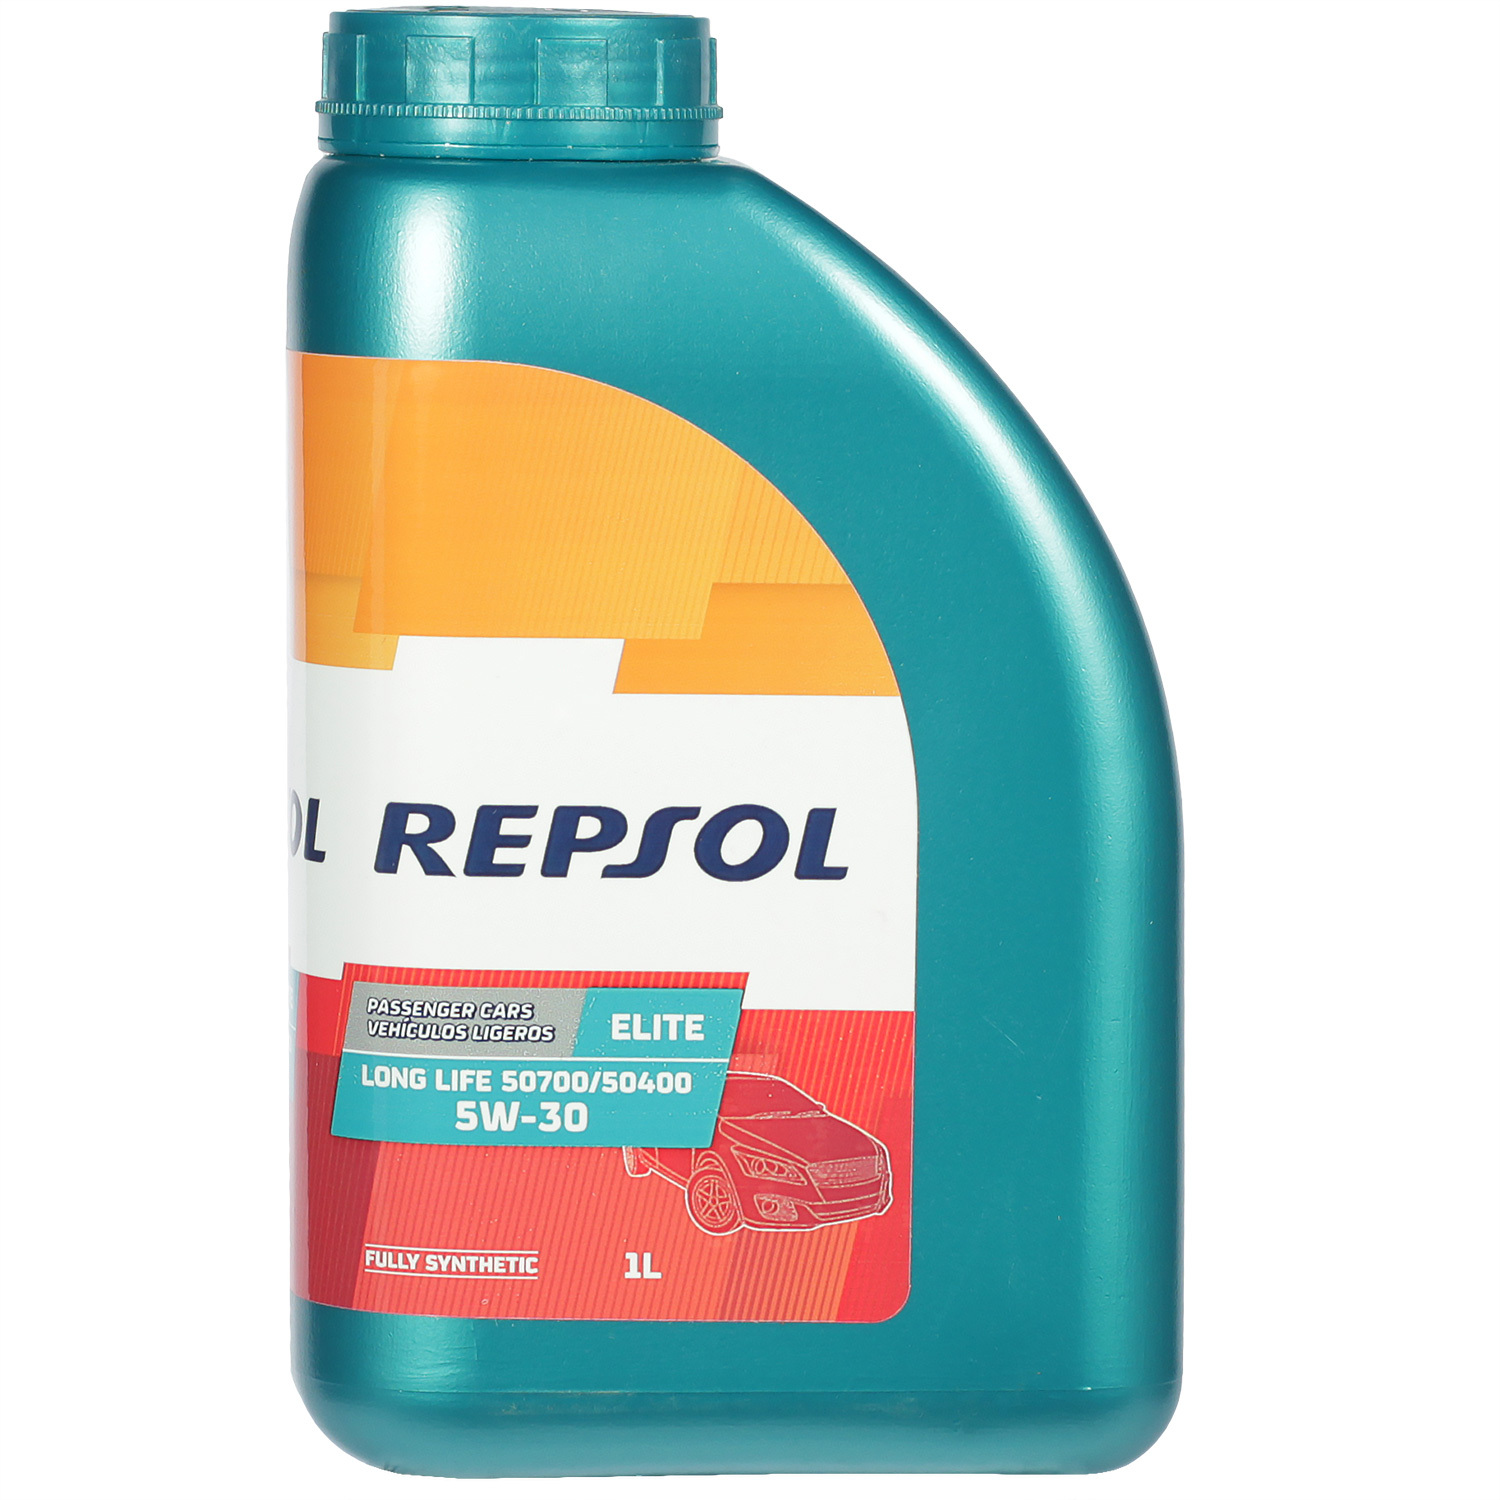 Repsol Моторное масло Repsol Elite LONG LIFE 50700/50400 5W-30, 1 л repsol масло моторное repsol elite long life 50700 50400 5w 30 4л